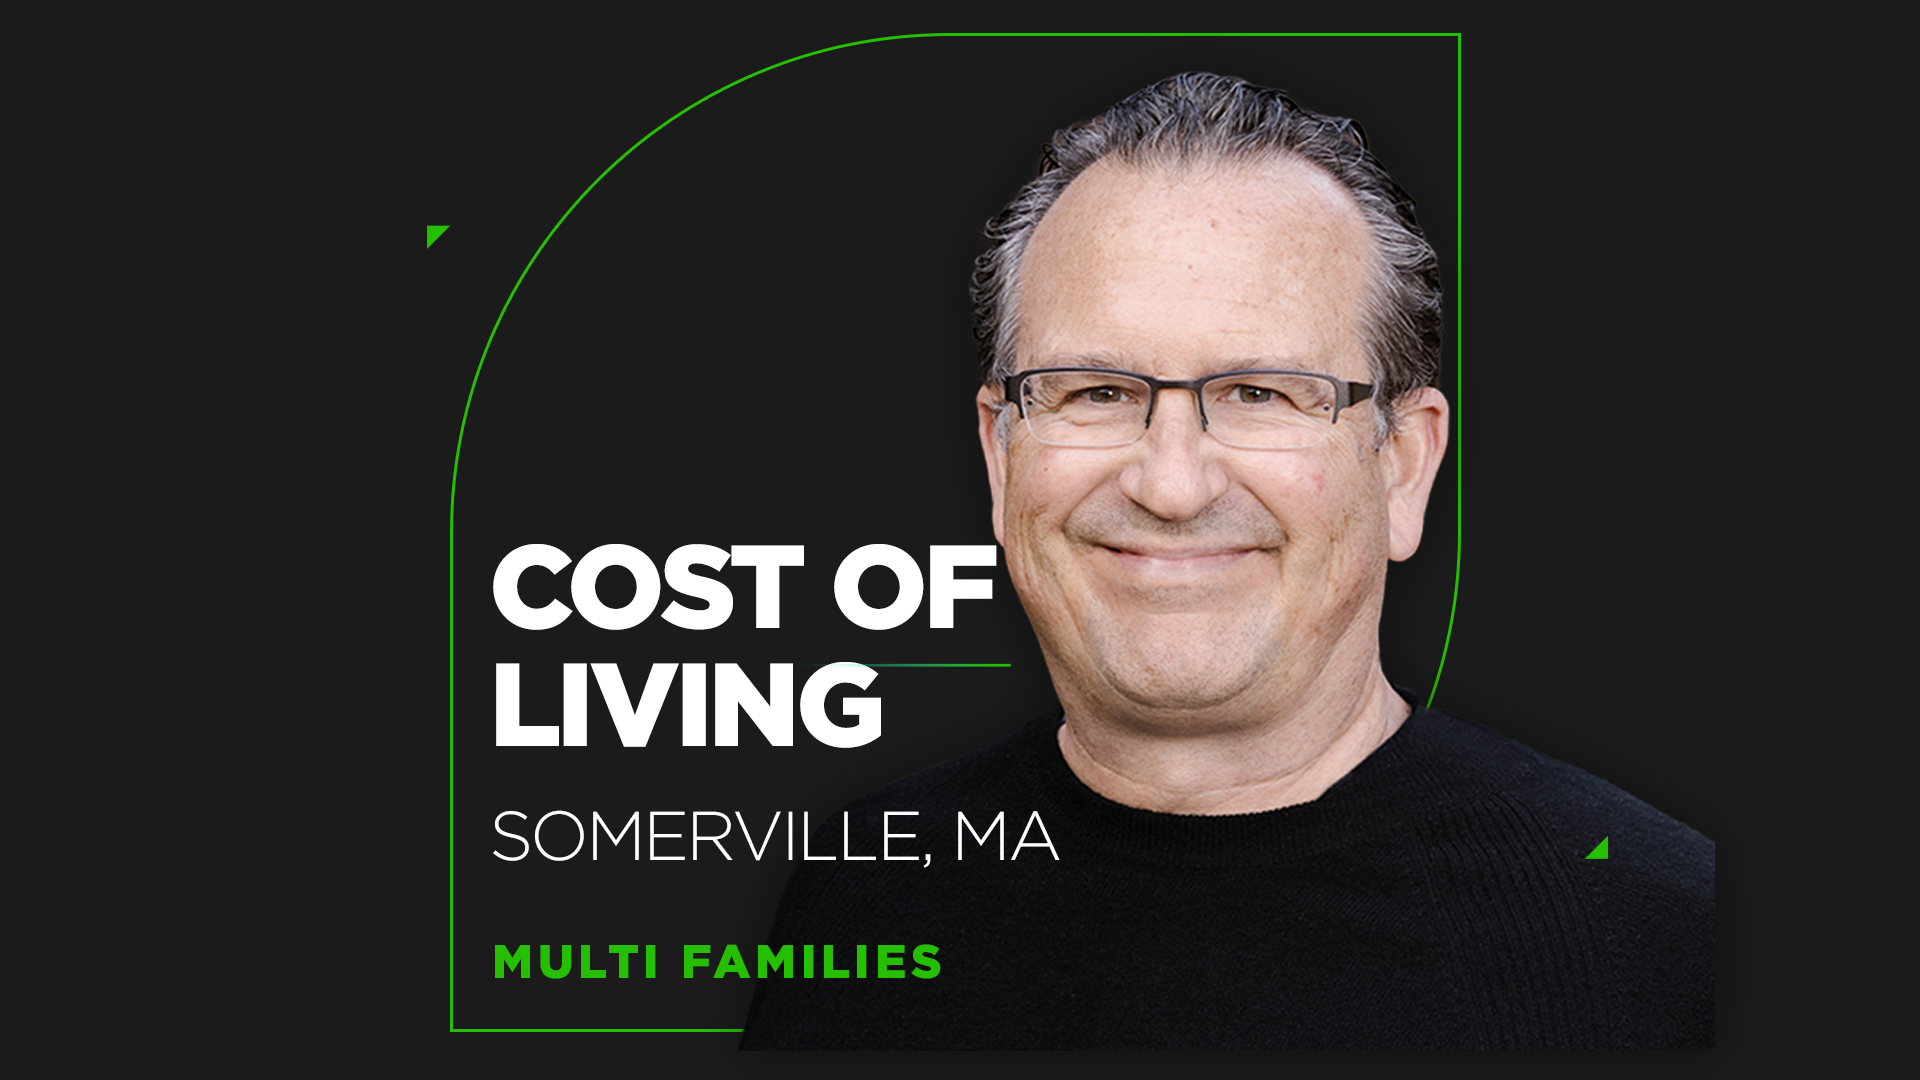 Video: Multifamilies in Somerville